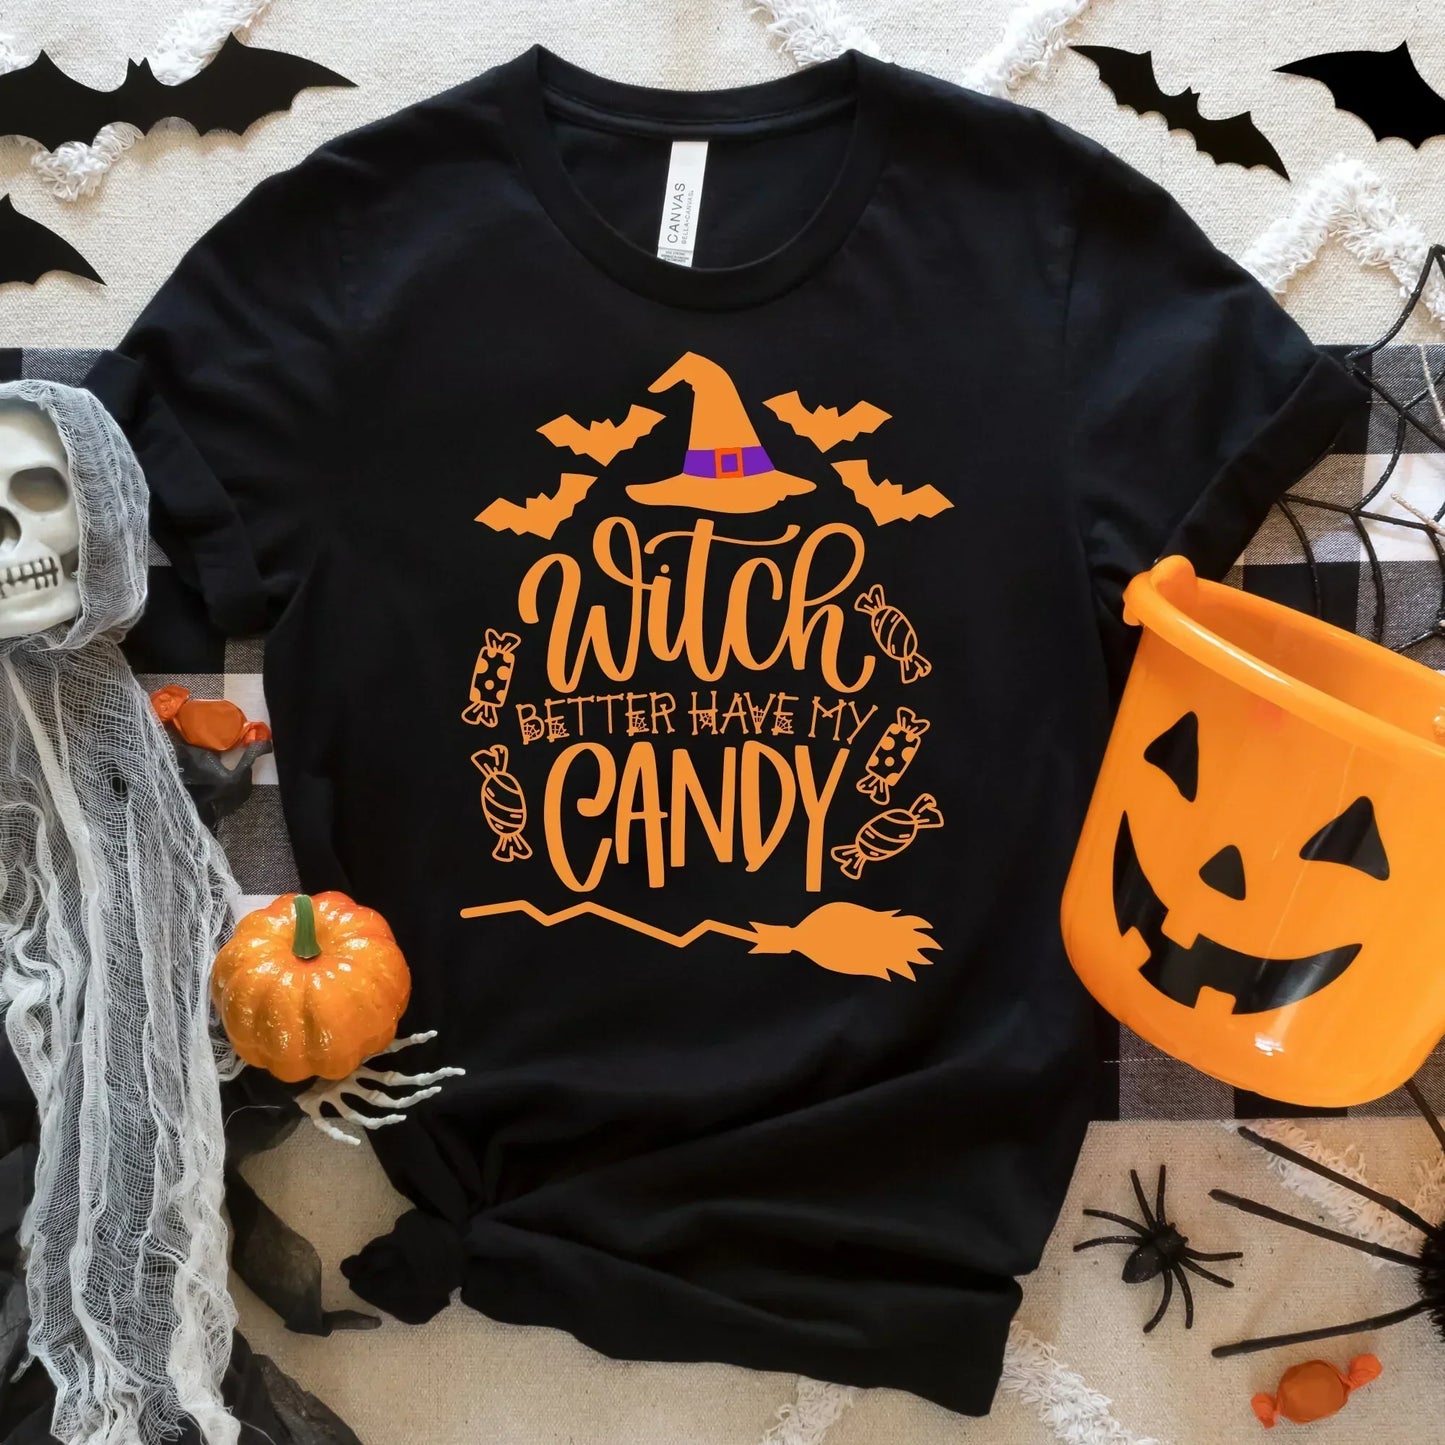 Halloween Shirt, Halloween Sweater, Witch Better Have my Candy, Funny Halloween Party Crewneck, Cute Trick or Treat Halloween Sweatshirt HMDesignStudioUS